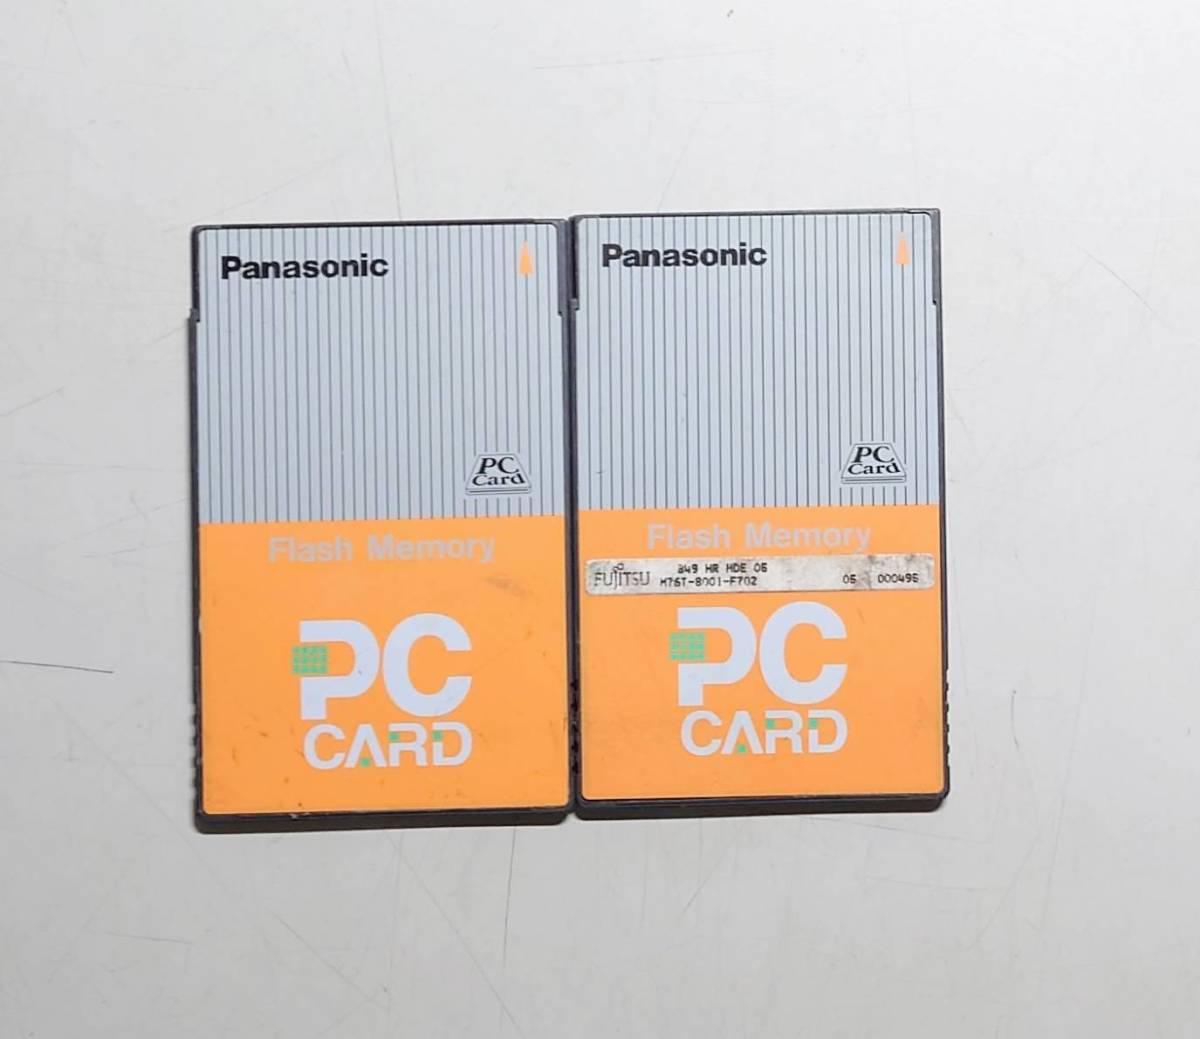 KN3129 Panasonic Flash Memory PC card BN-04MHFCCK2 2枚セット